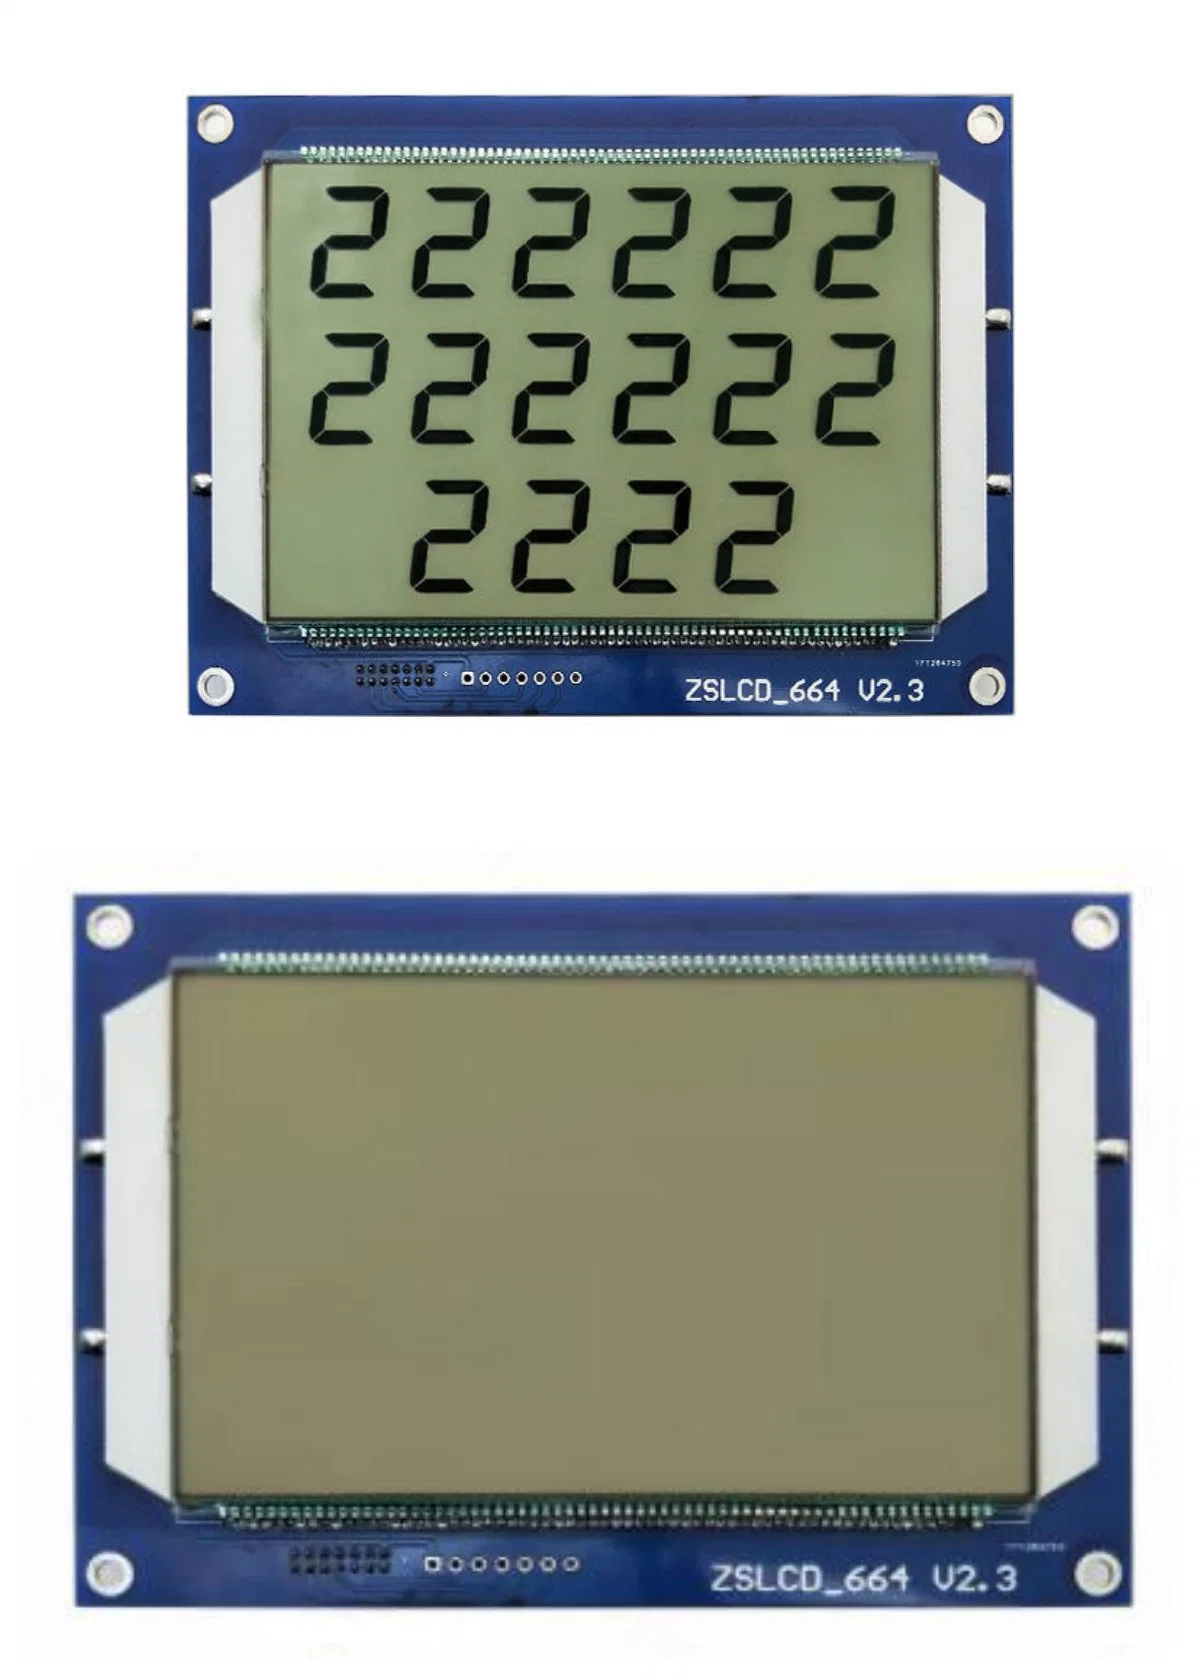 Termóstato inteligente negativo TN Stn HTN FSTN VA Transmissive 6 O ′ Relógio Monitor LCD personalizado de baixo custo com tela LCM Pinos